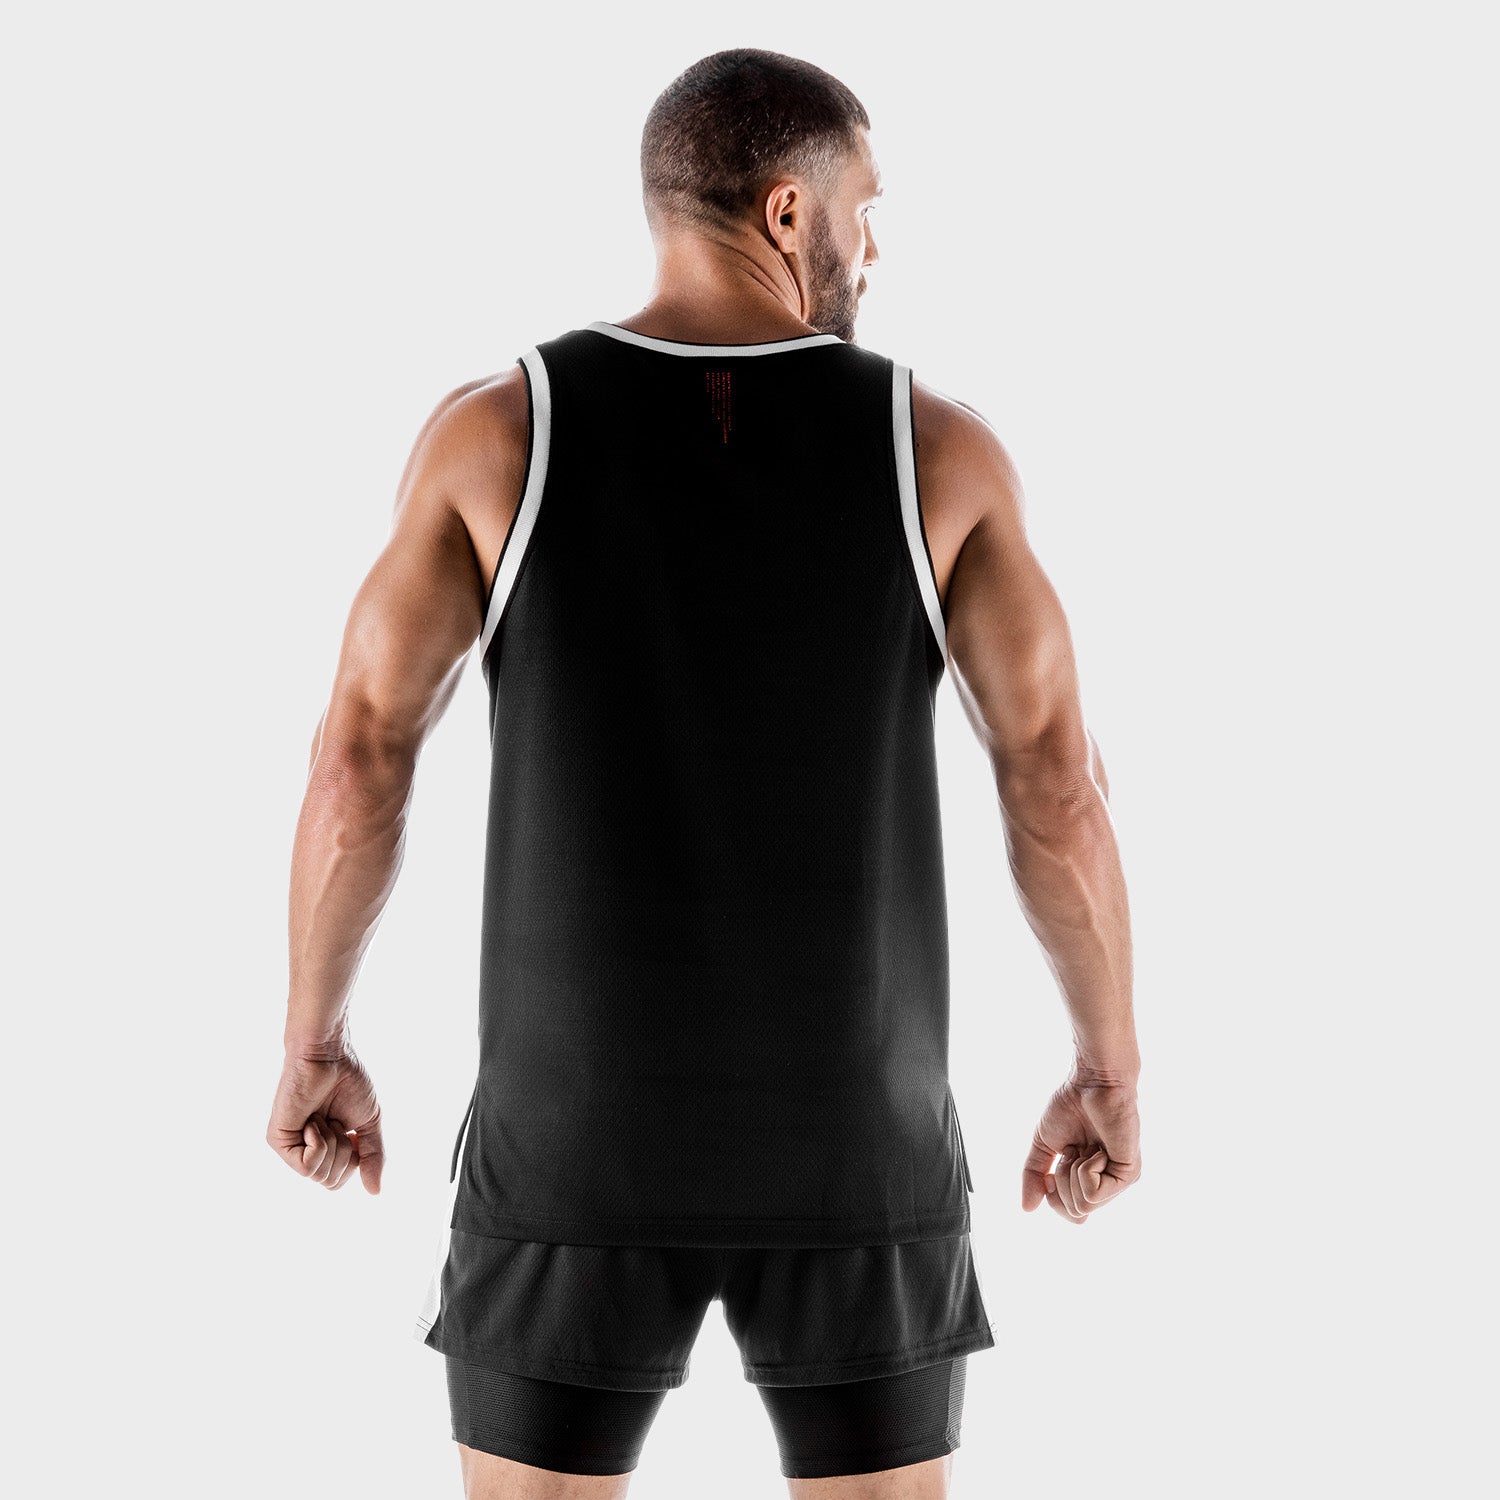 squatwolf-gym-wear-hybrid-2-0-tank-black-workout-tank-tops-for-men